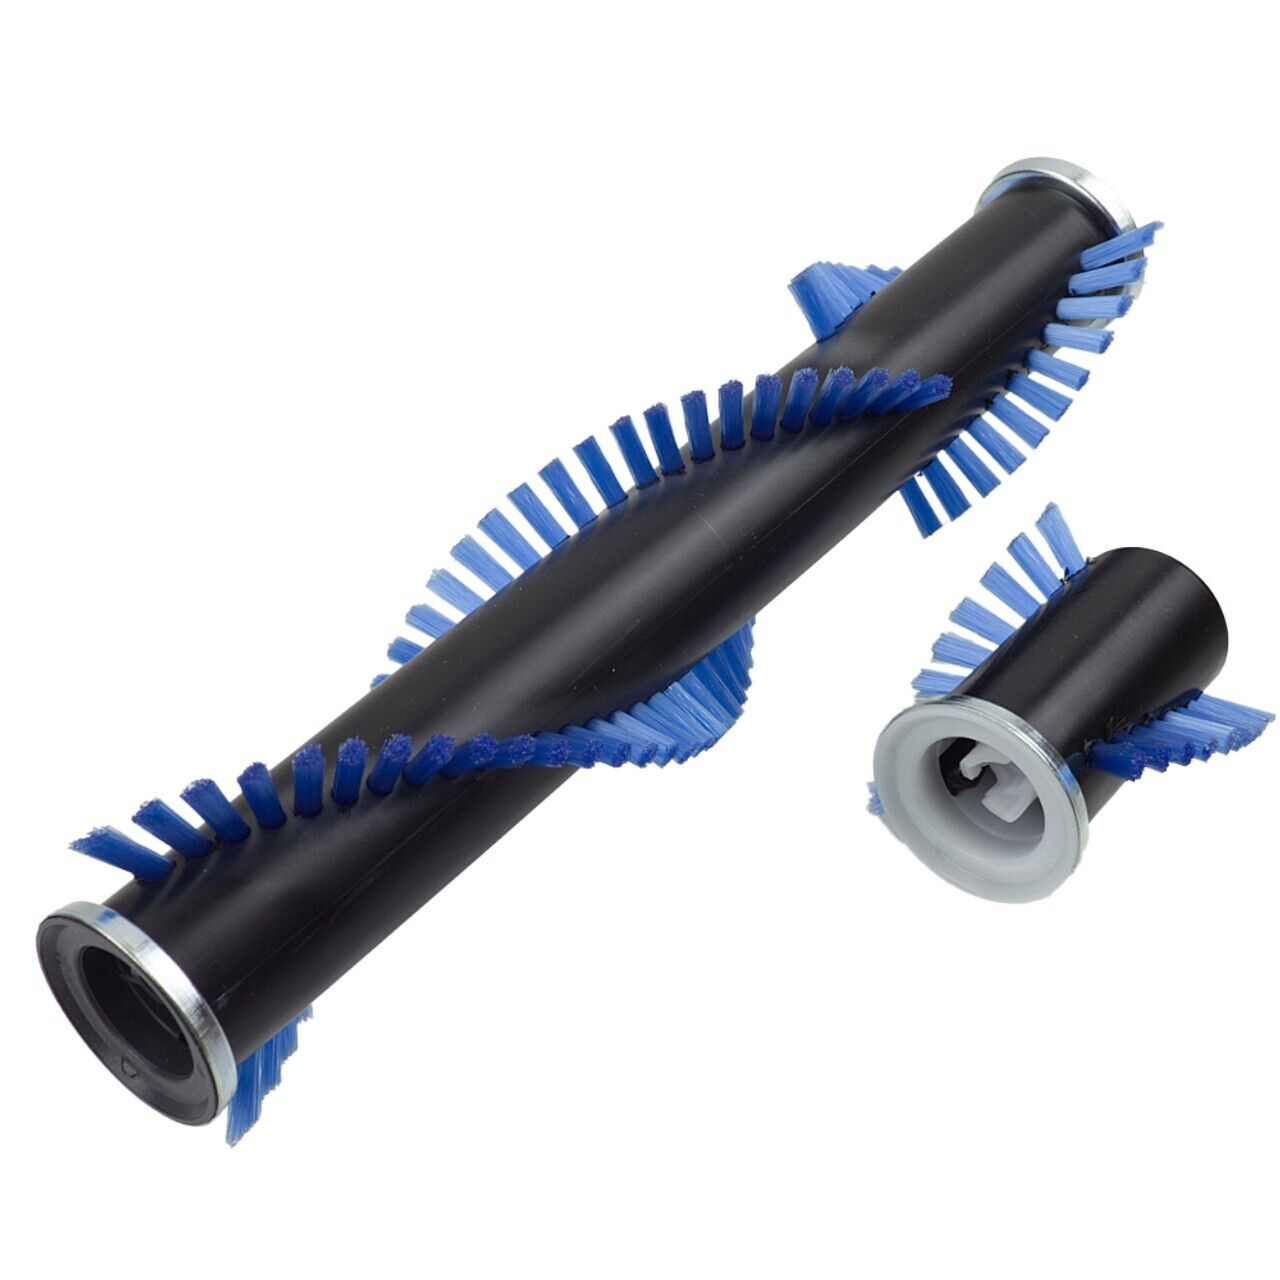 FDSF Brush Roller for V8 Vacuum Cleaner, Replacement Brush Roll